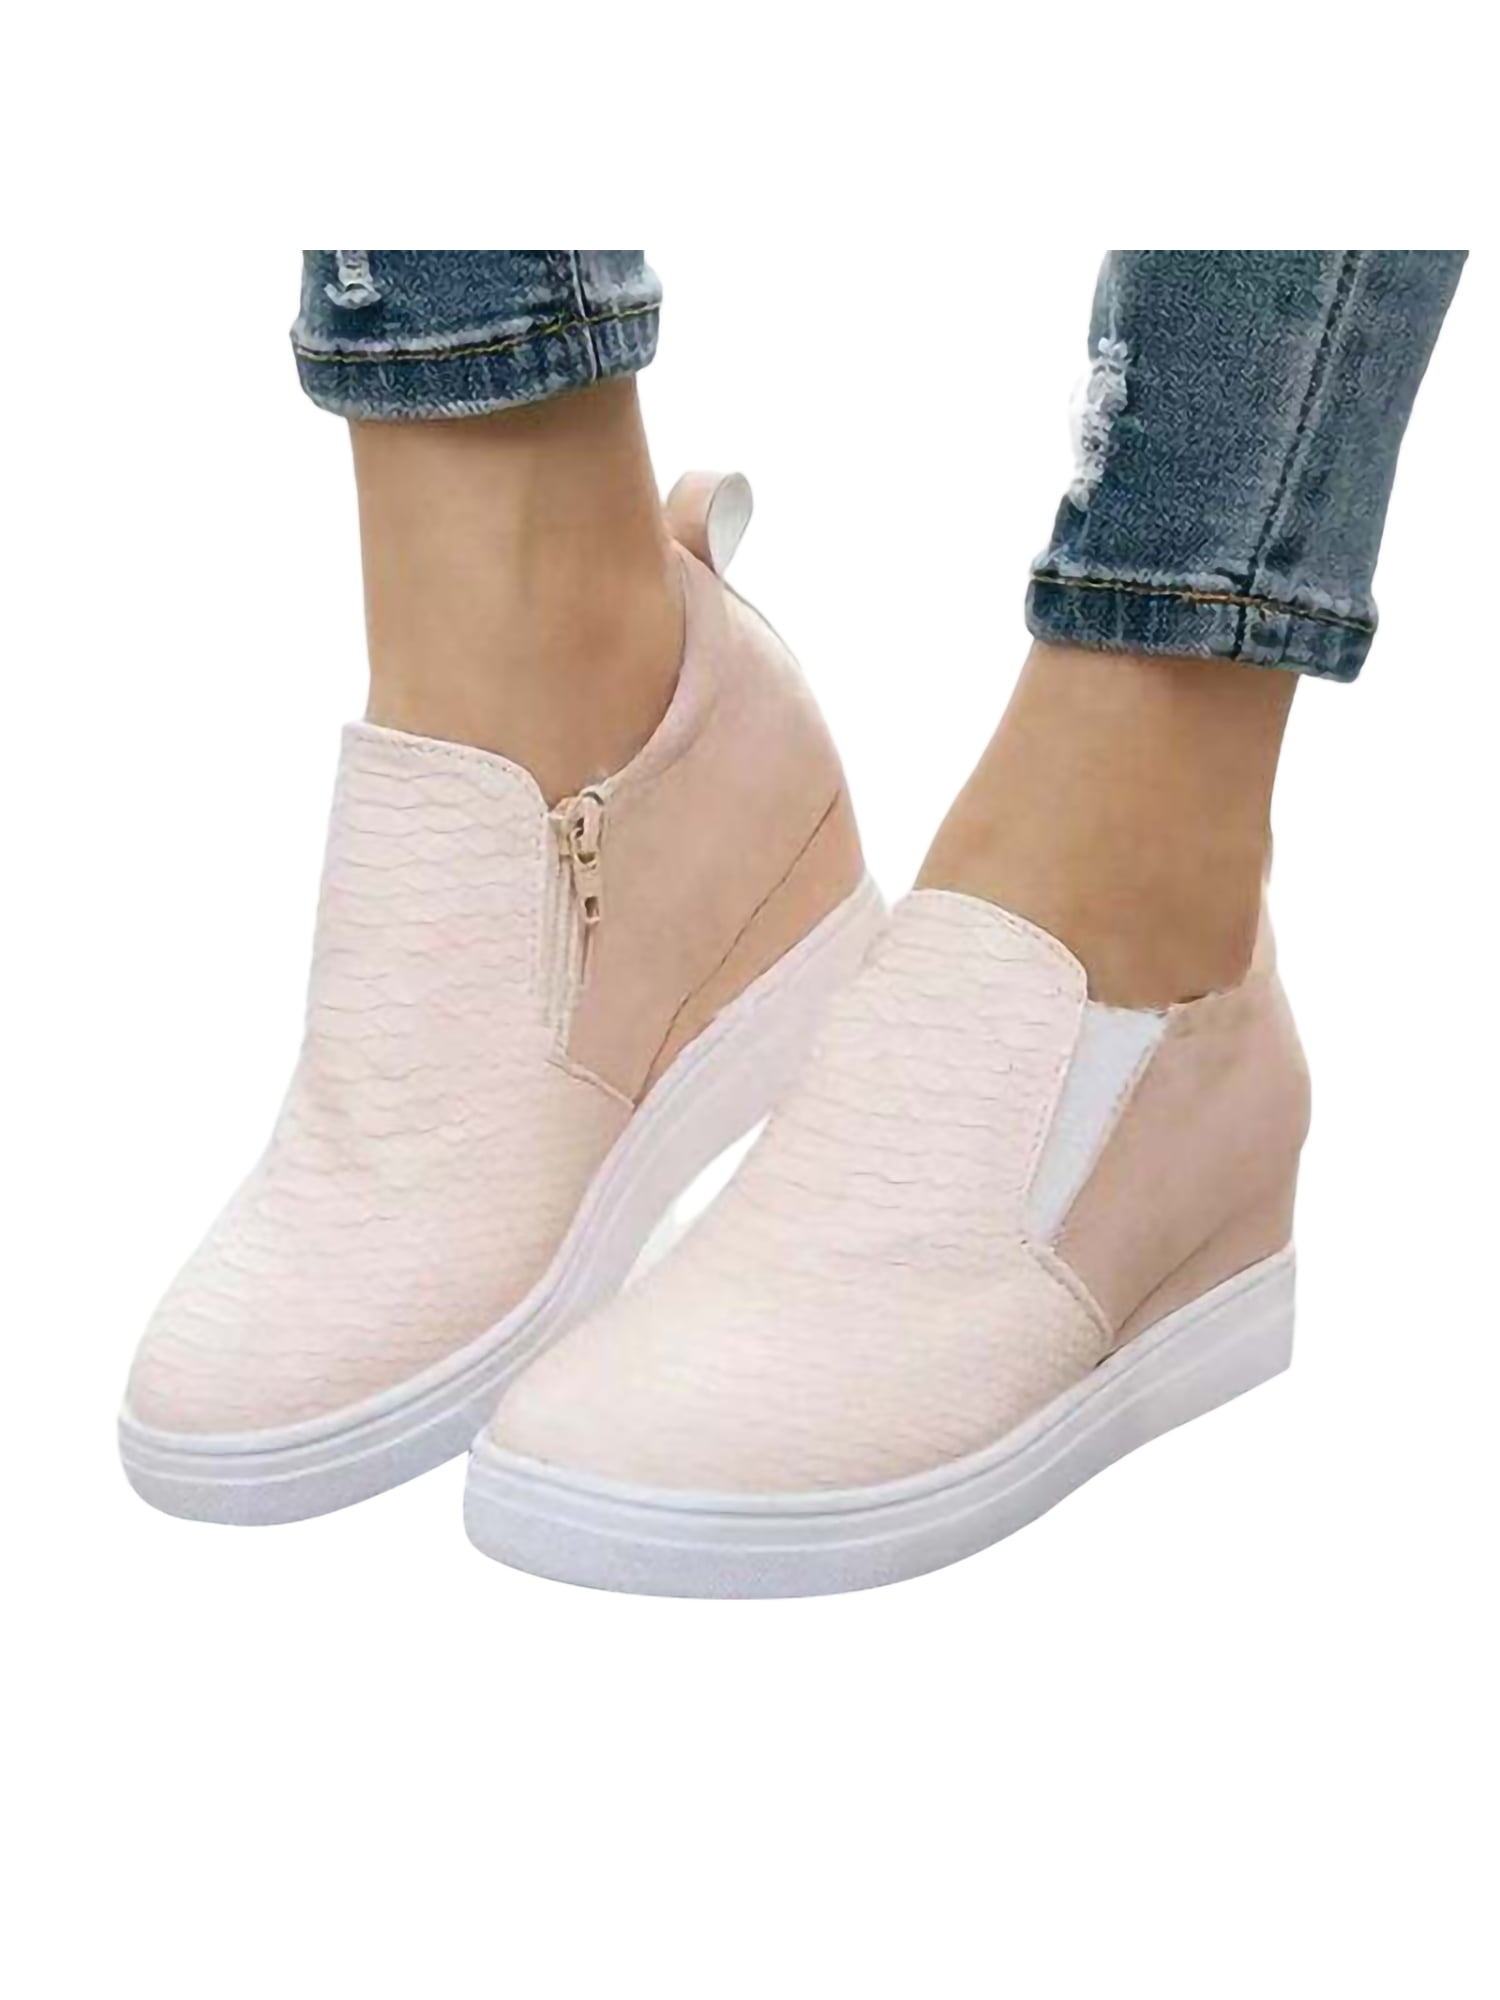 NOMIMAS Women Wedges Sneakers Casual Breathable Mesh Fashion Platform Slip-On Hidden Spring Autumn Heels Female Shoes